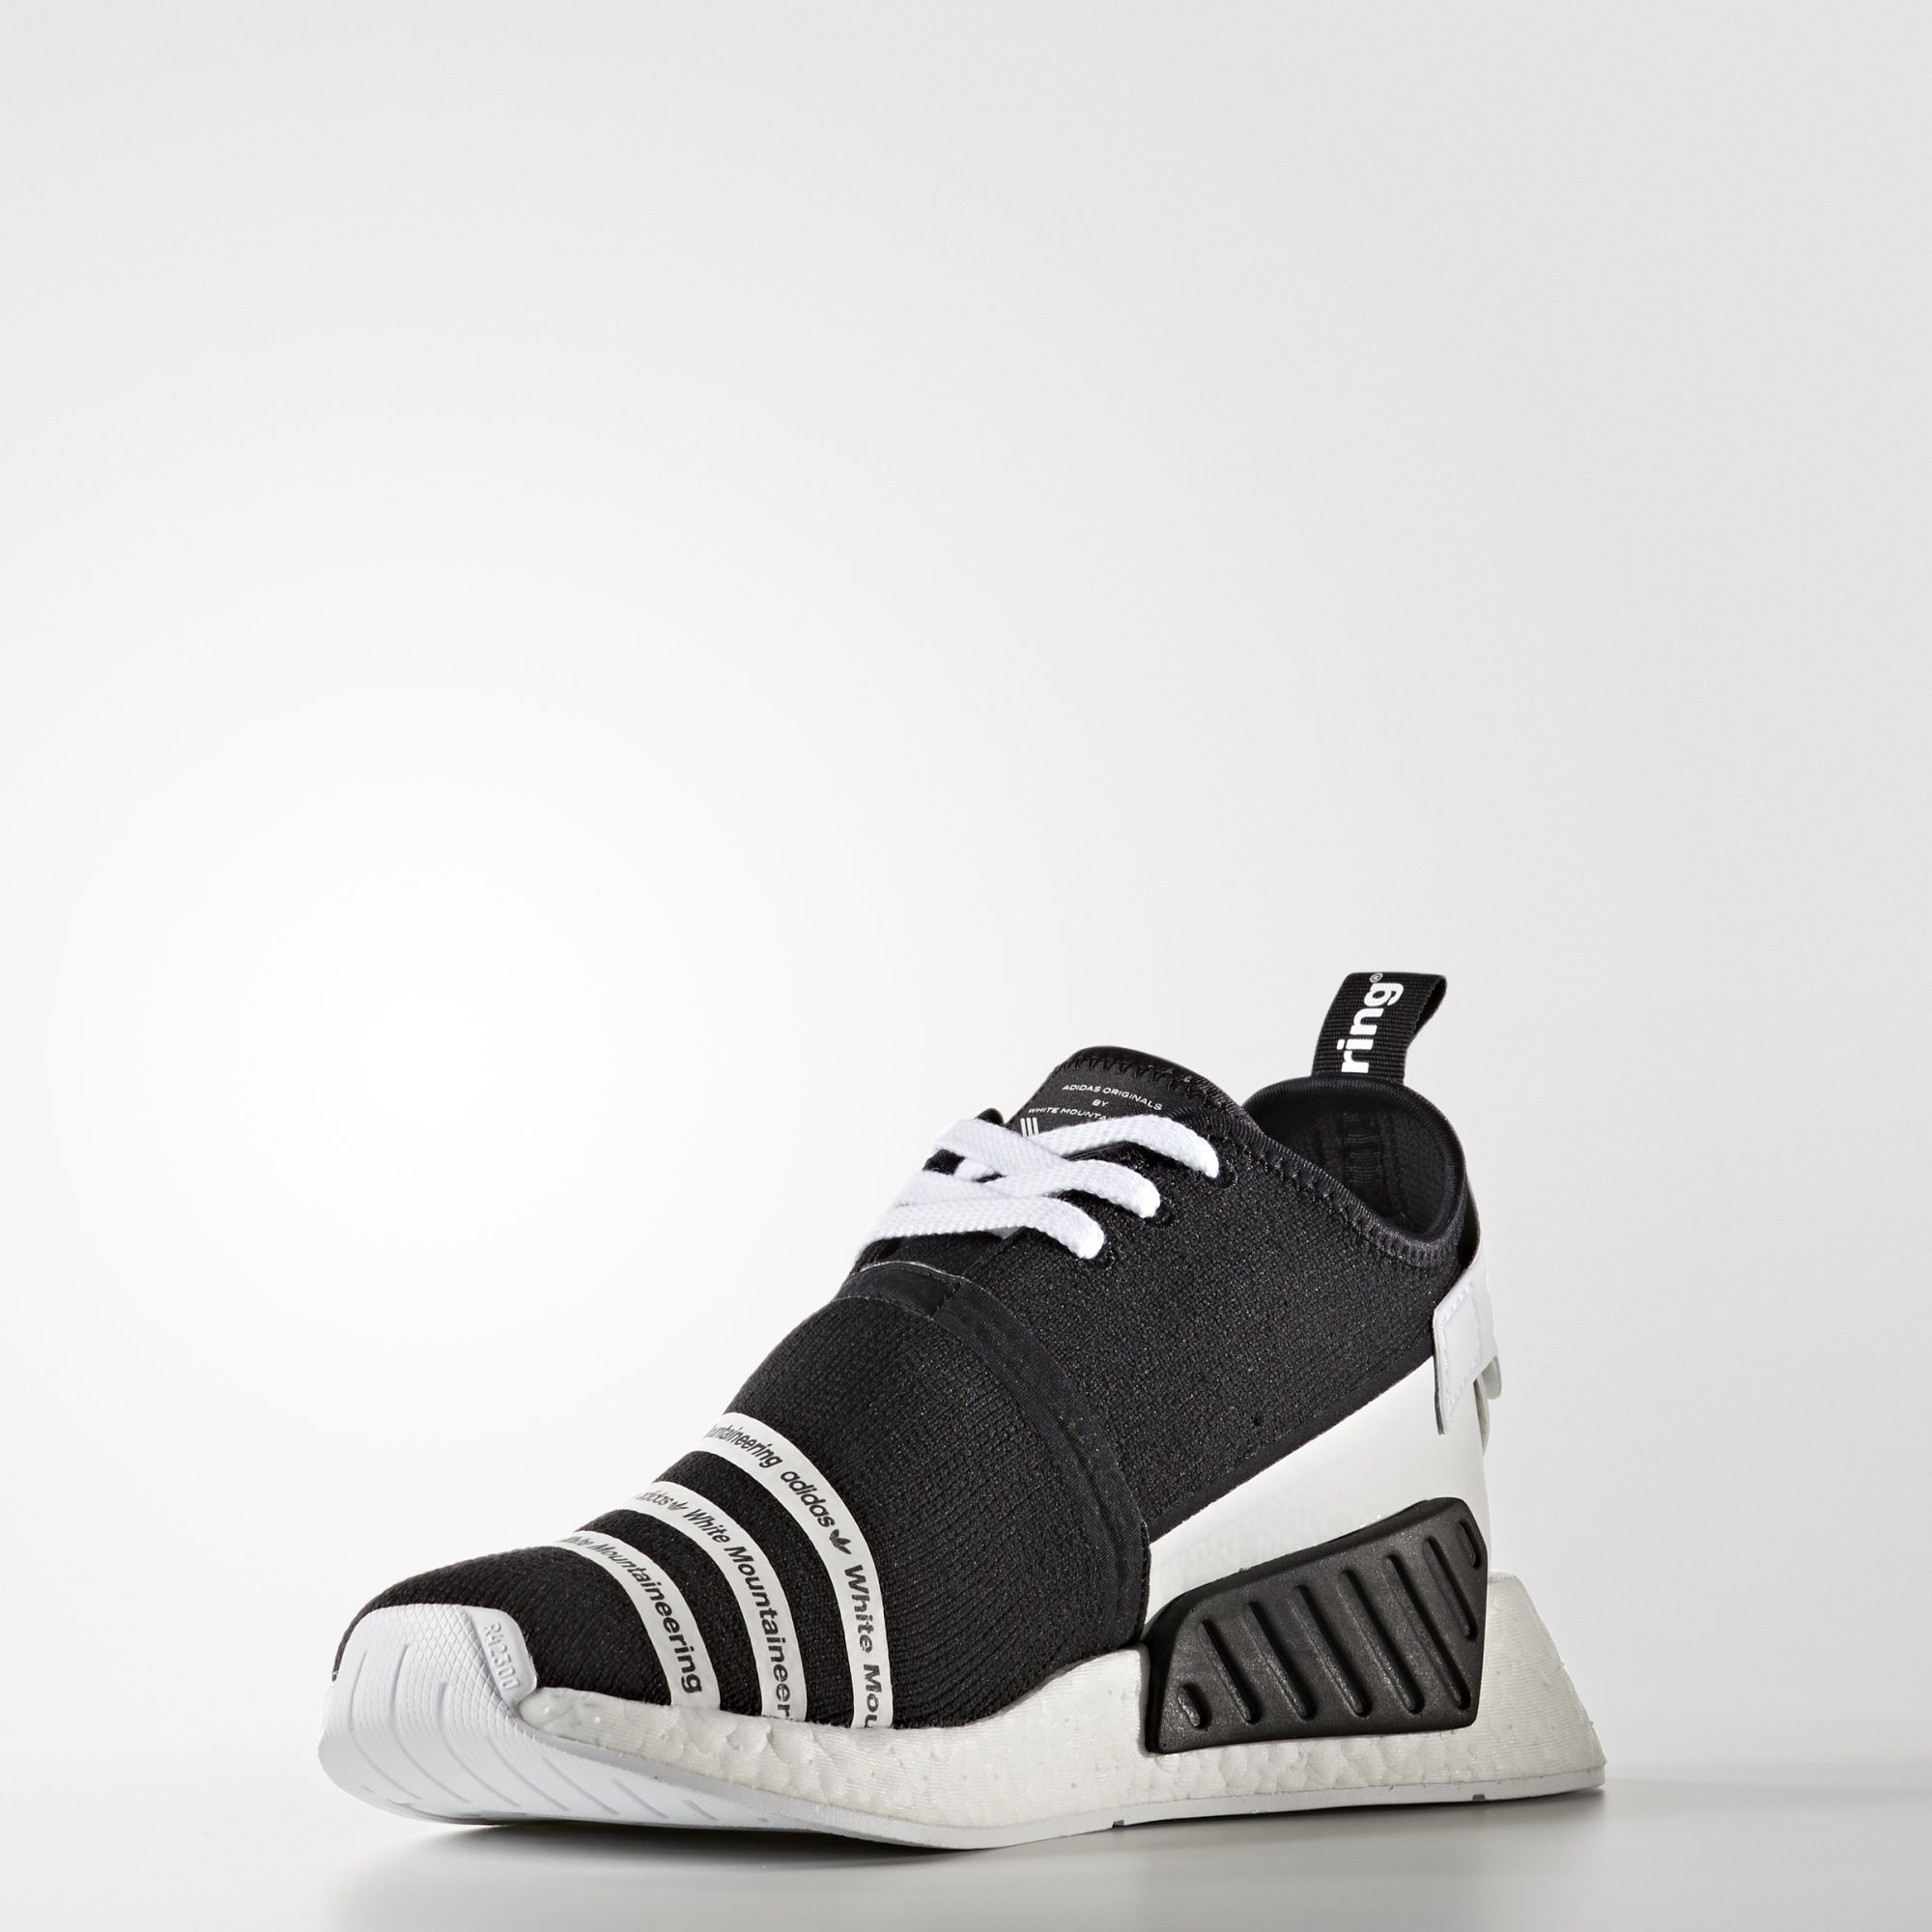 Adidas x White Mountaineering
NMD_R2 Primeknit
Core Black / Footwear White